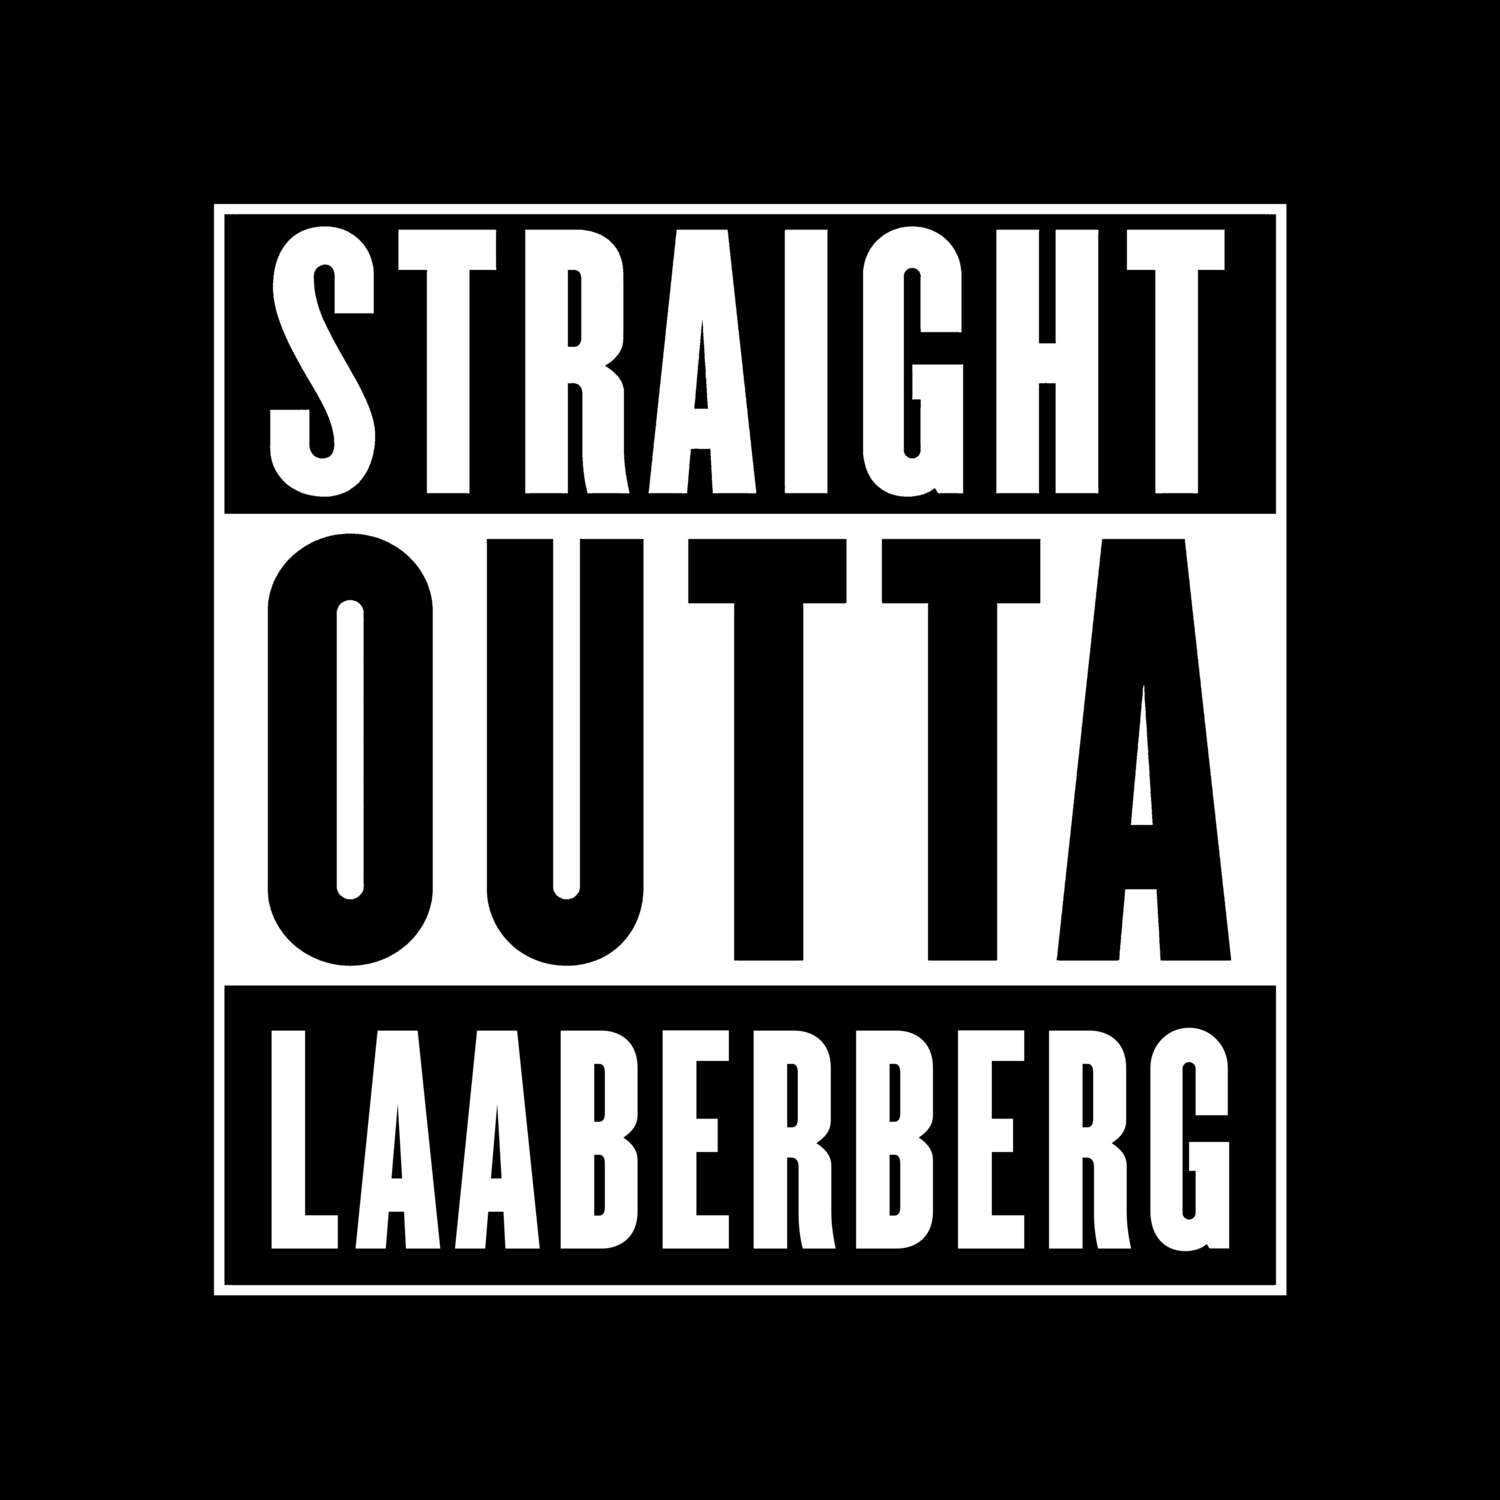 Laaberberg T-Shirt »Straight Outta«